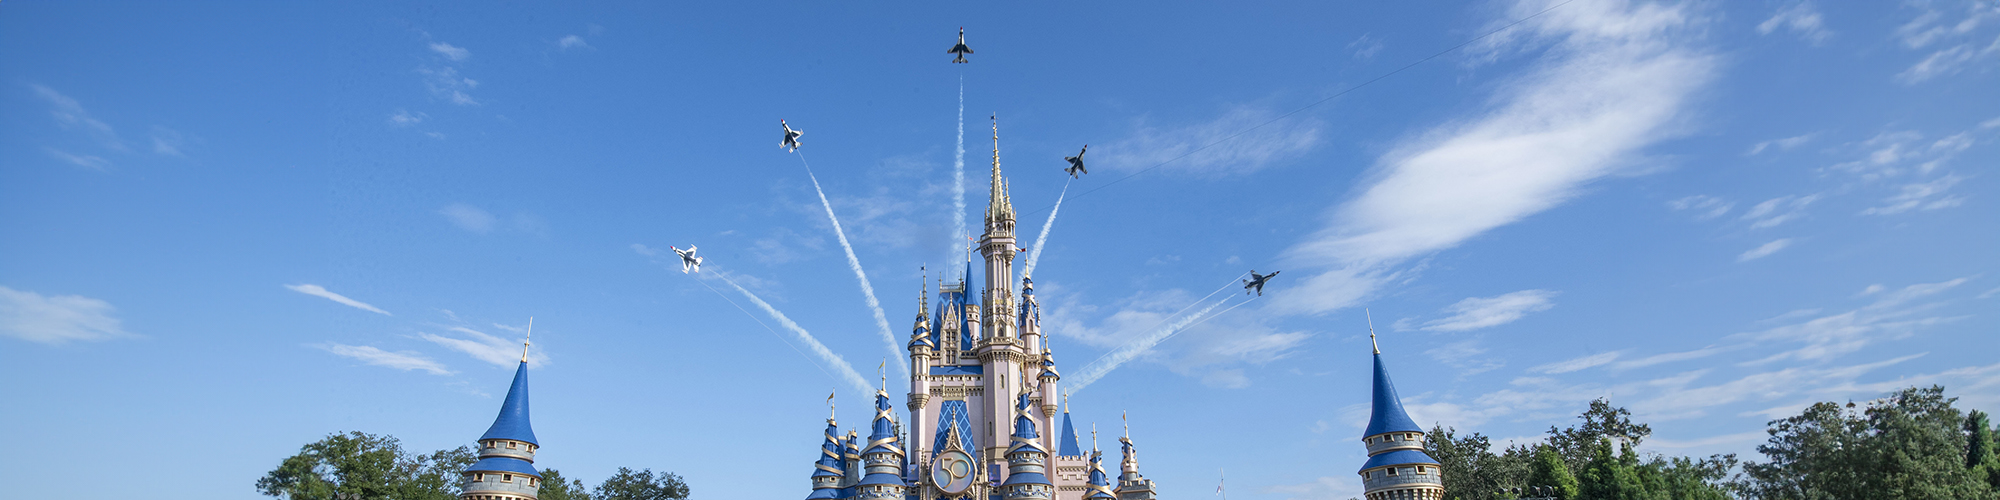 Thunderbirds fly over Disney